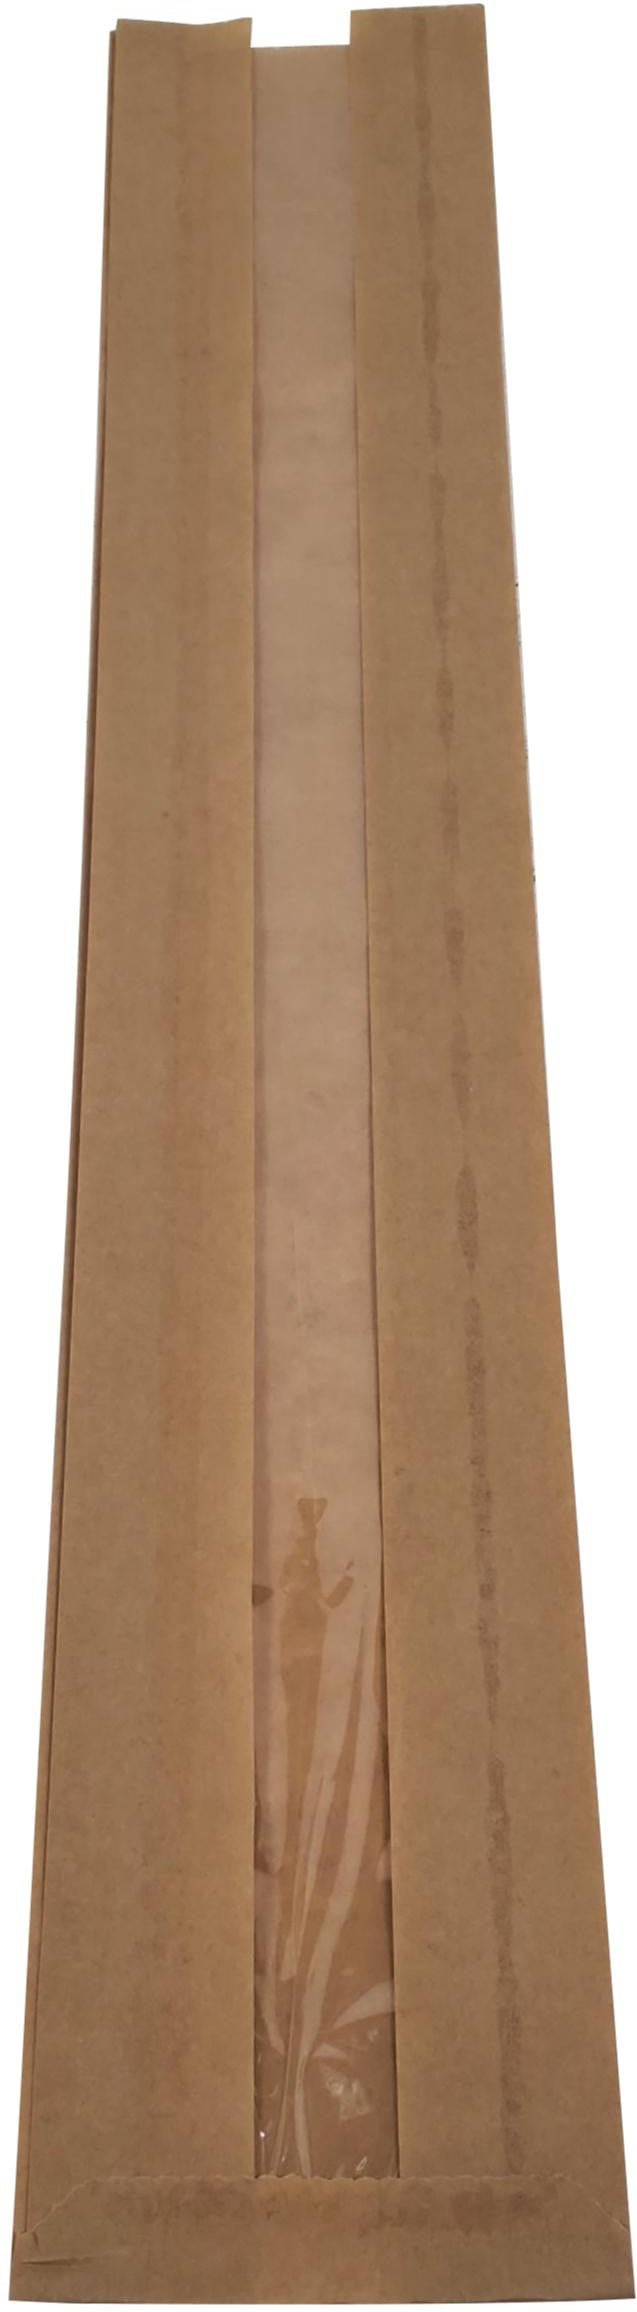 Atlas Paper Bag - 4 x 2 x 24" Brown Bread Bags with Window, 500/Cs - 0258890